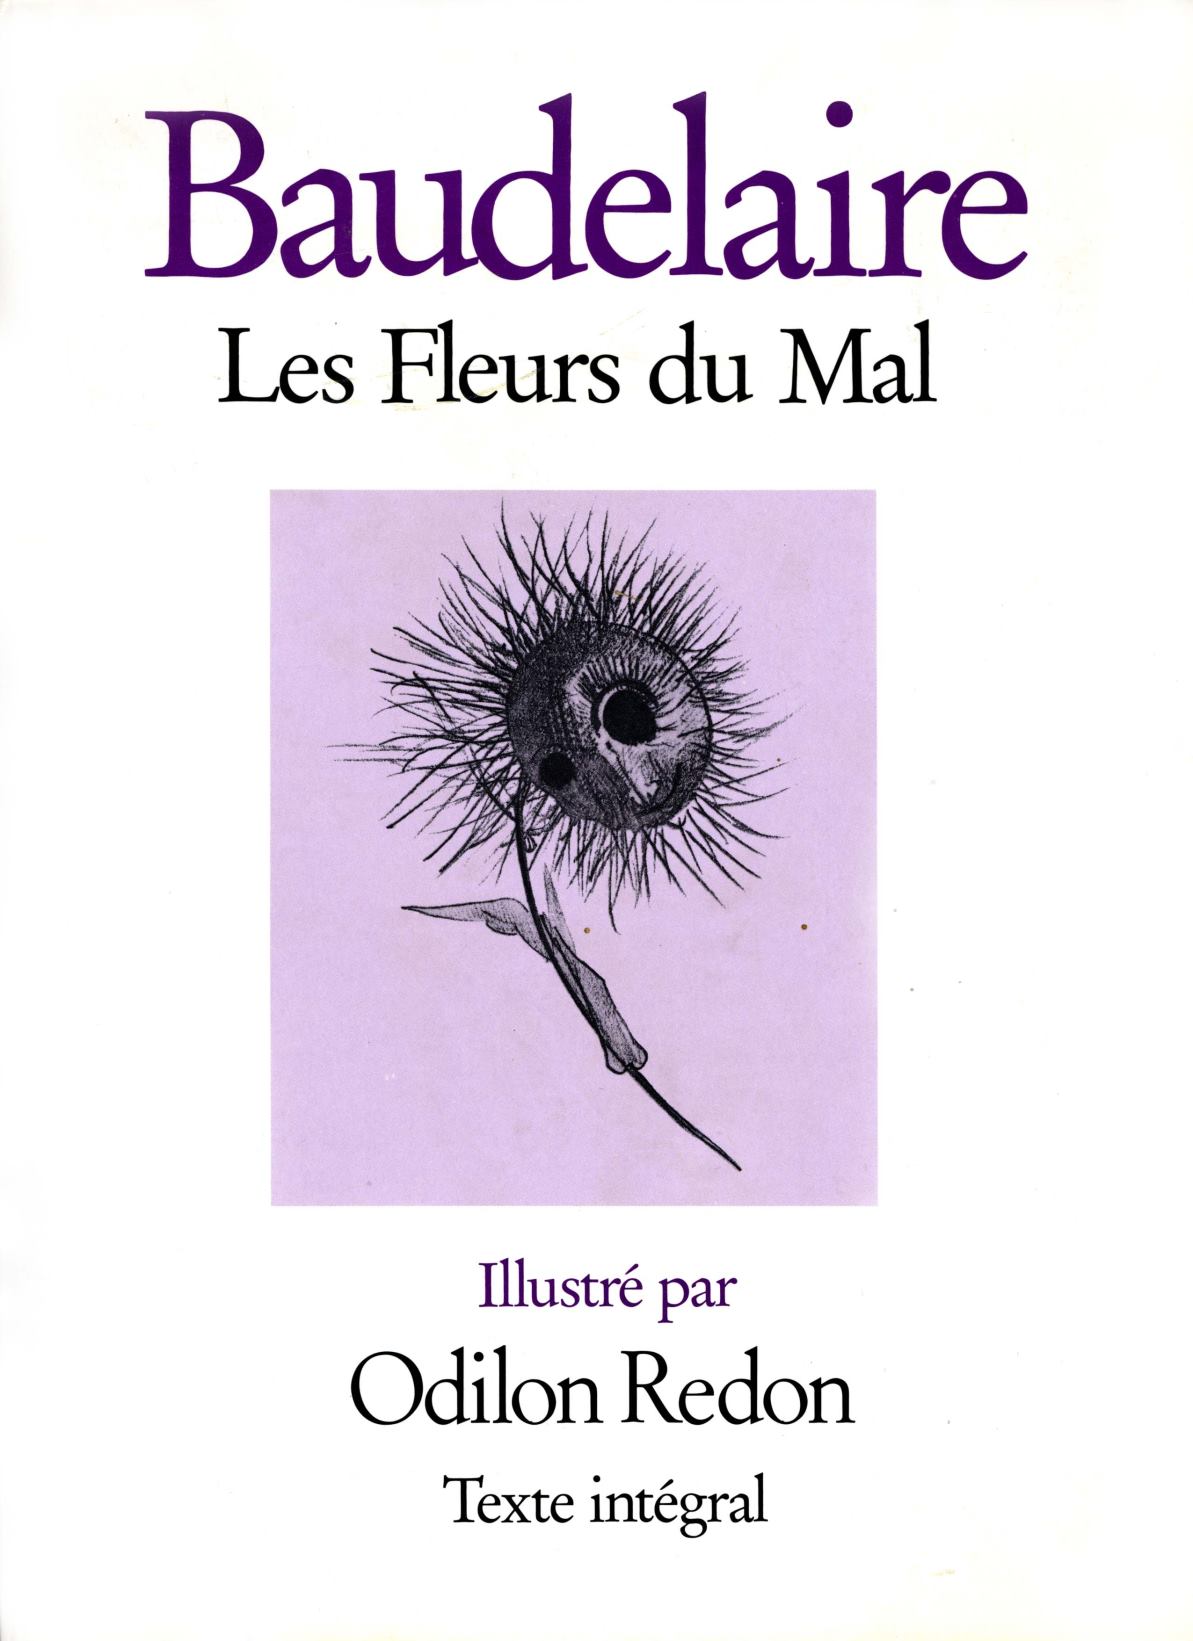 Baudelaire, Redon